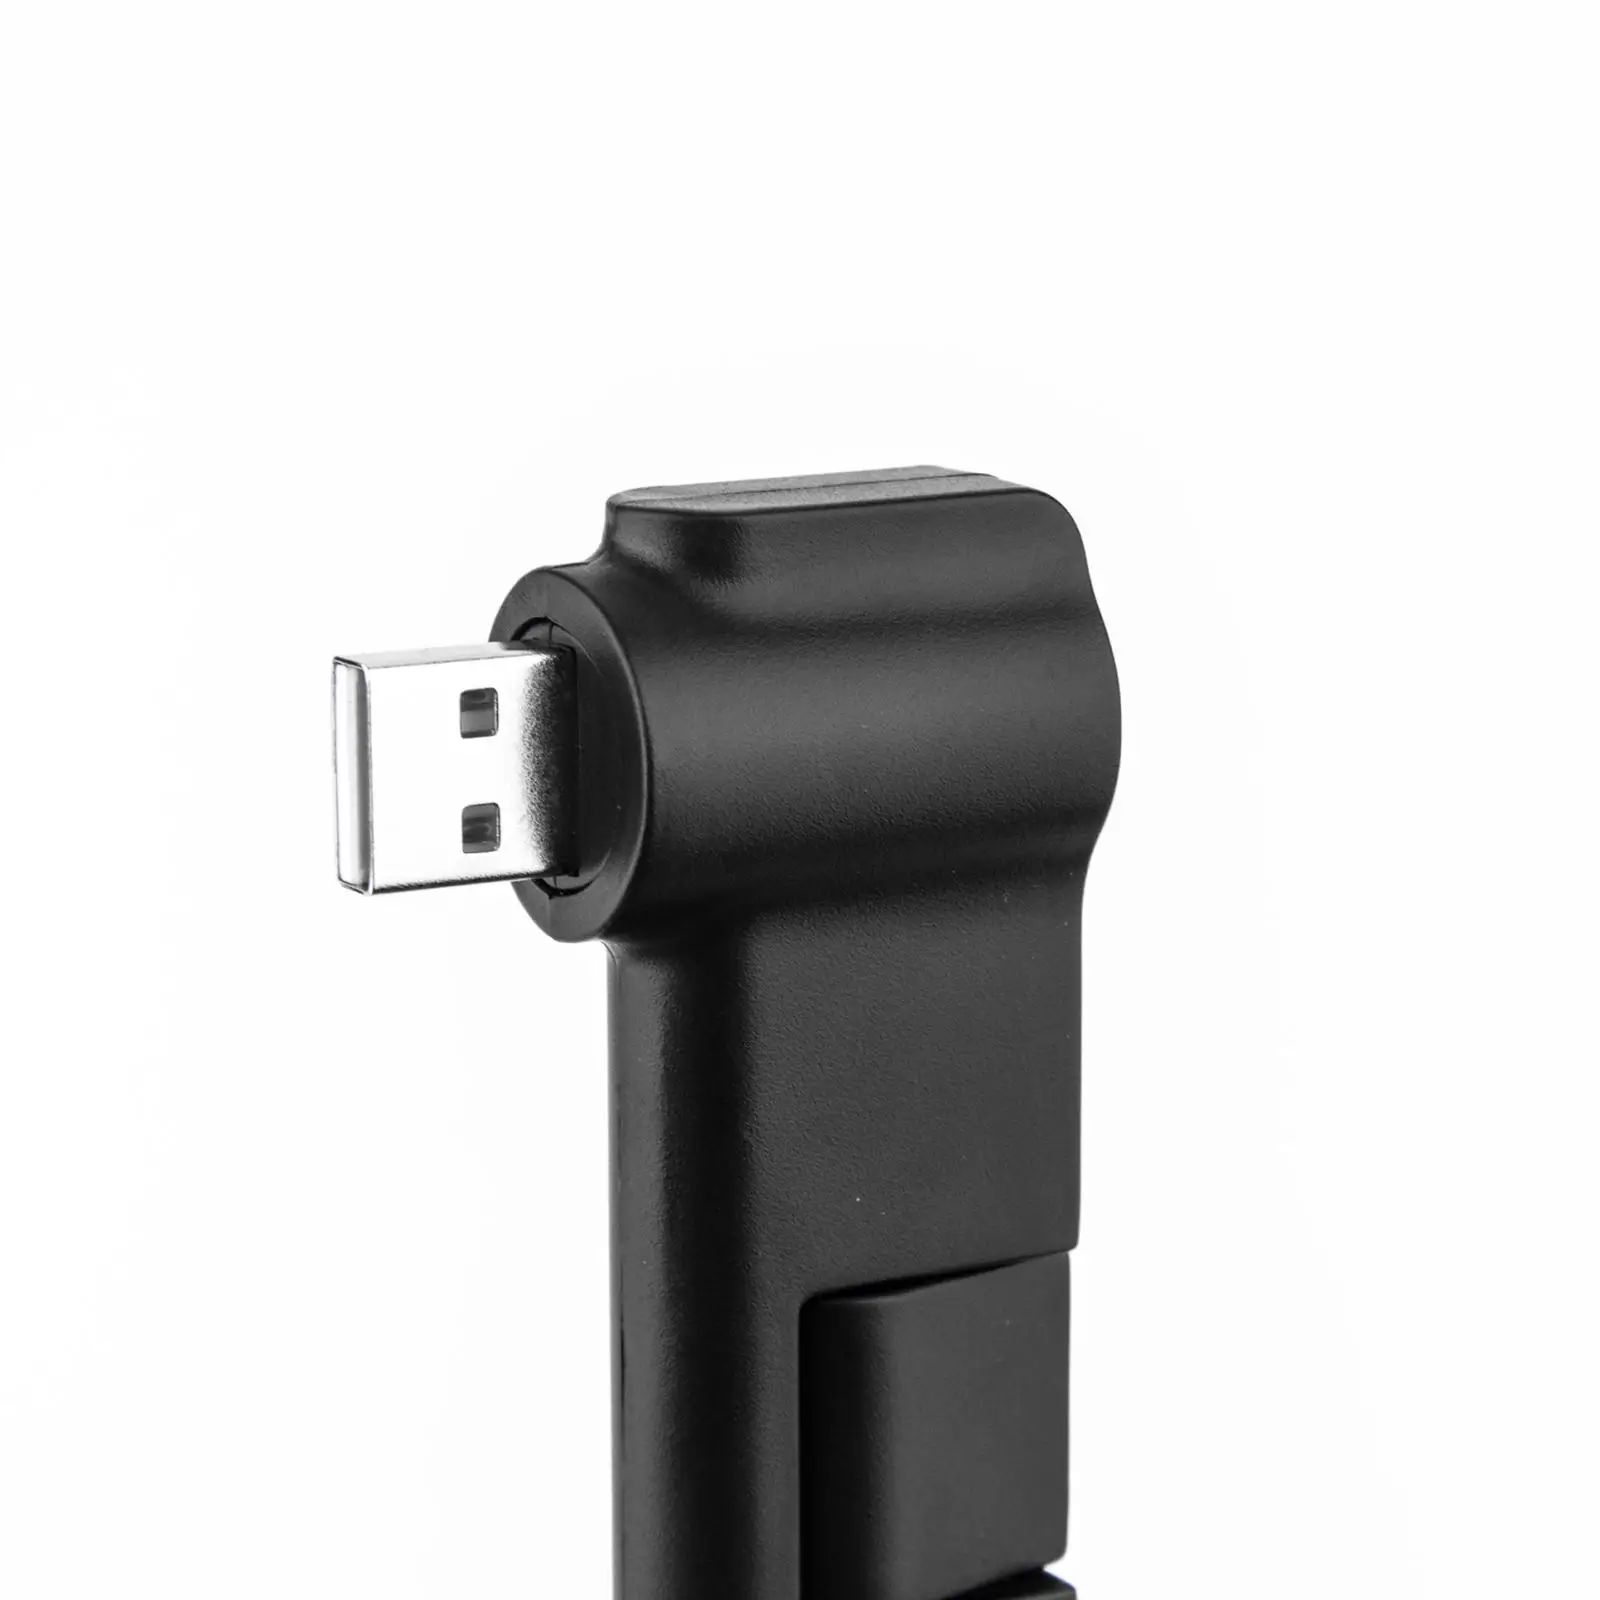 4 Port USB Hub 90/180 Degree Rotatable Plug and Play USB Port Splitter for Hand Painted Board Printer Digital Camera